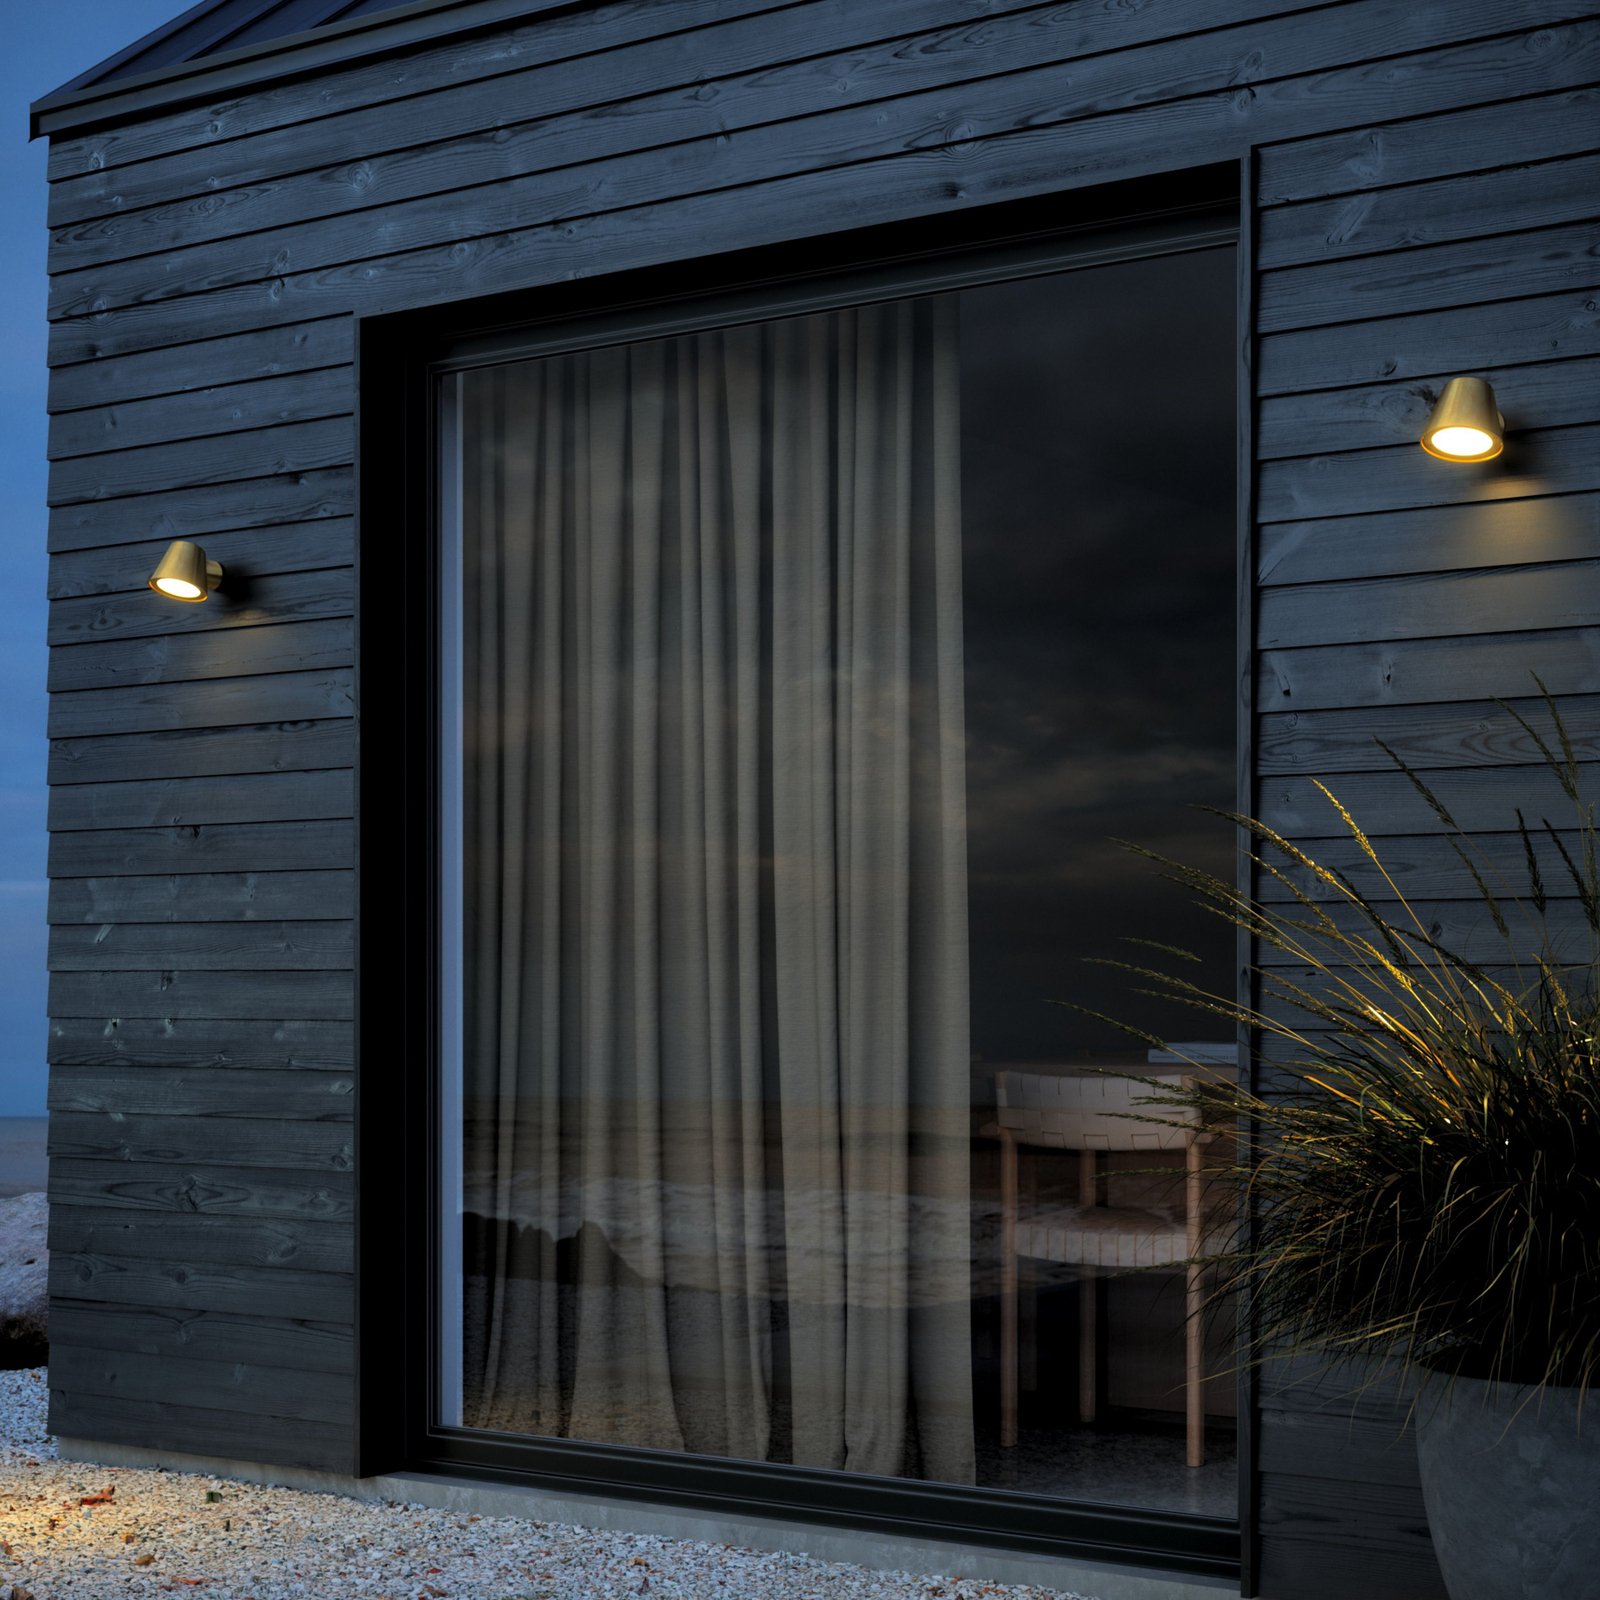 Outdoor wall light Aleria, 1 x GU10, brass, seawater resistant